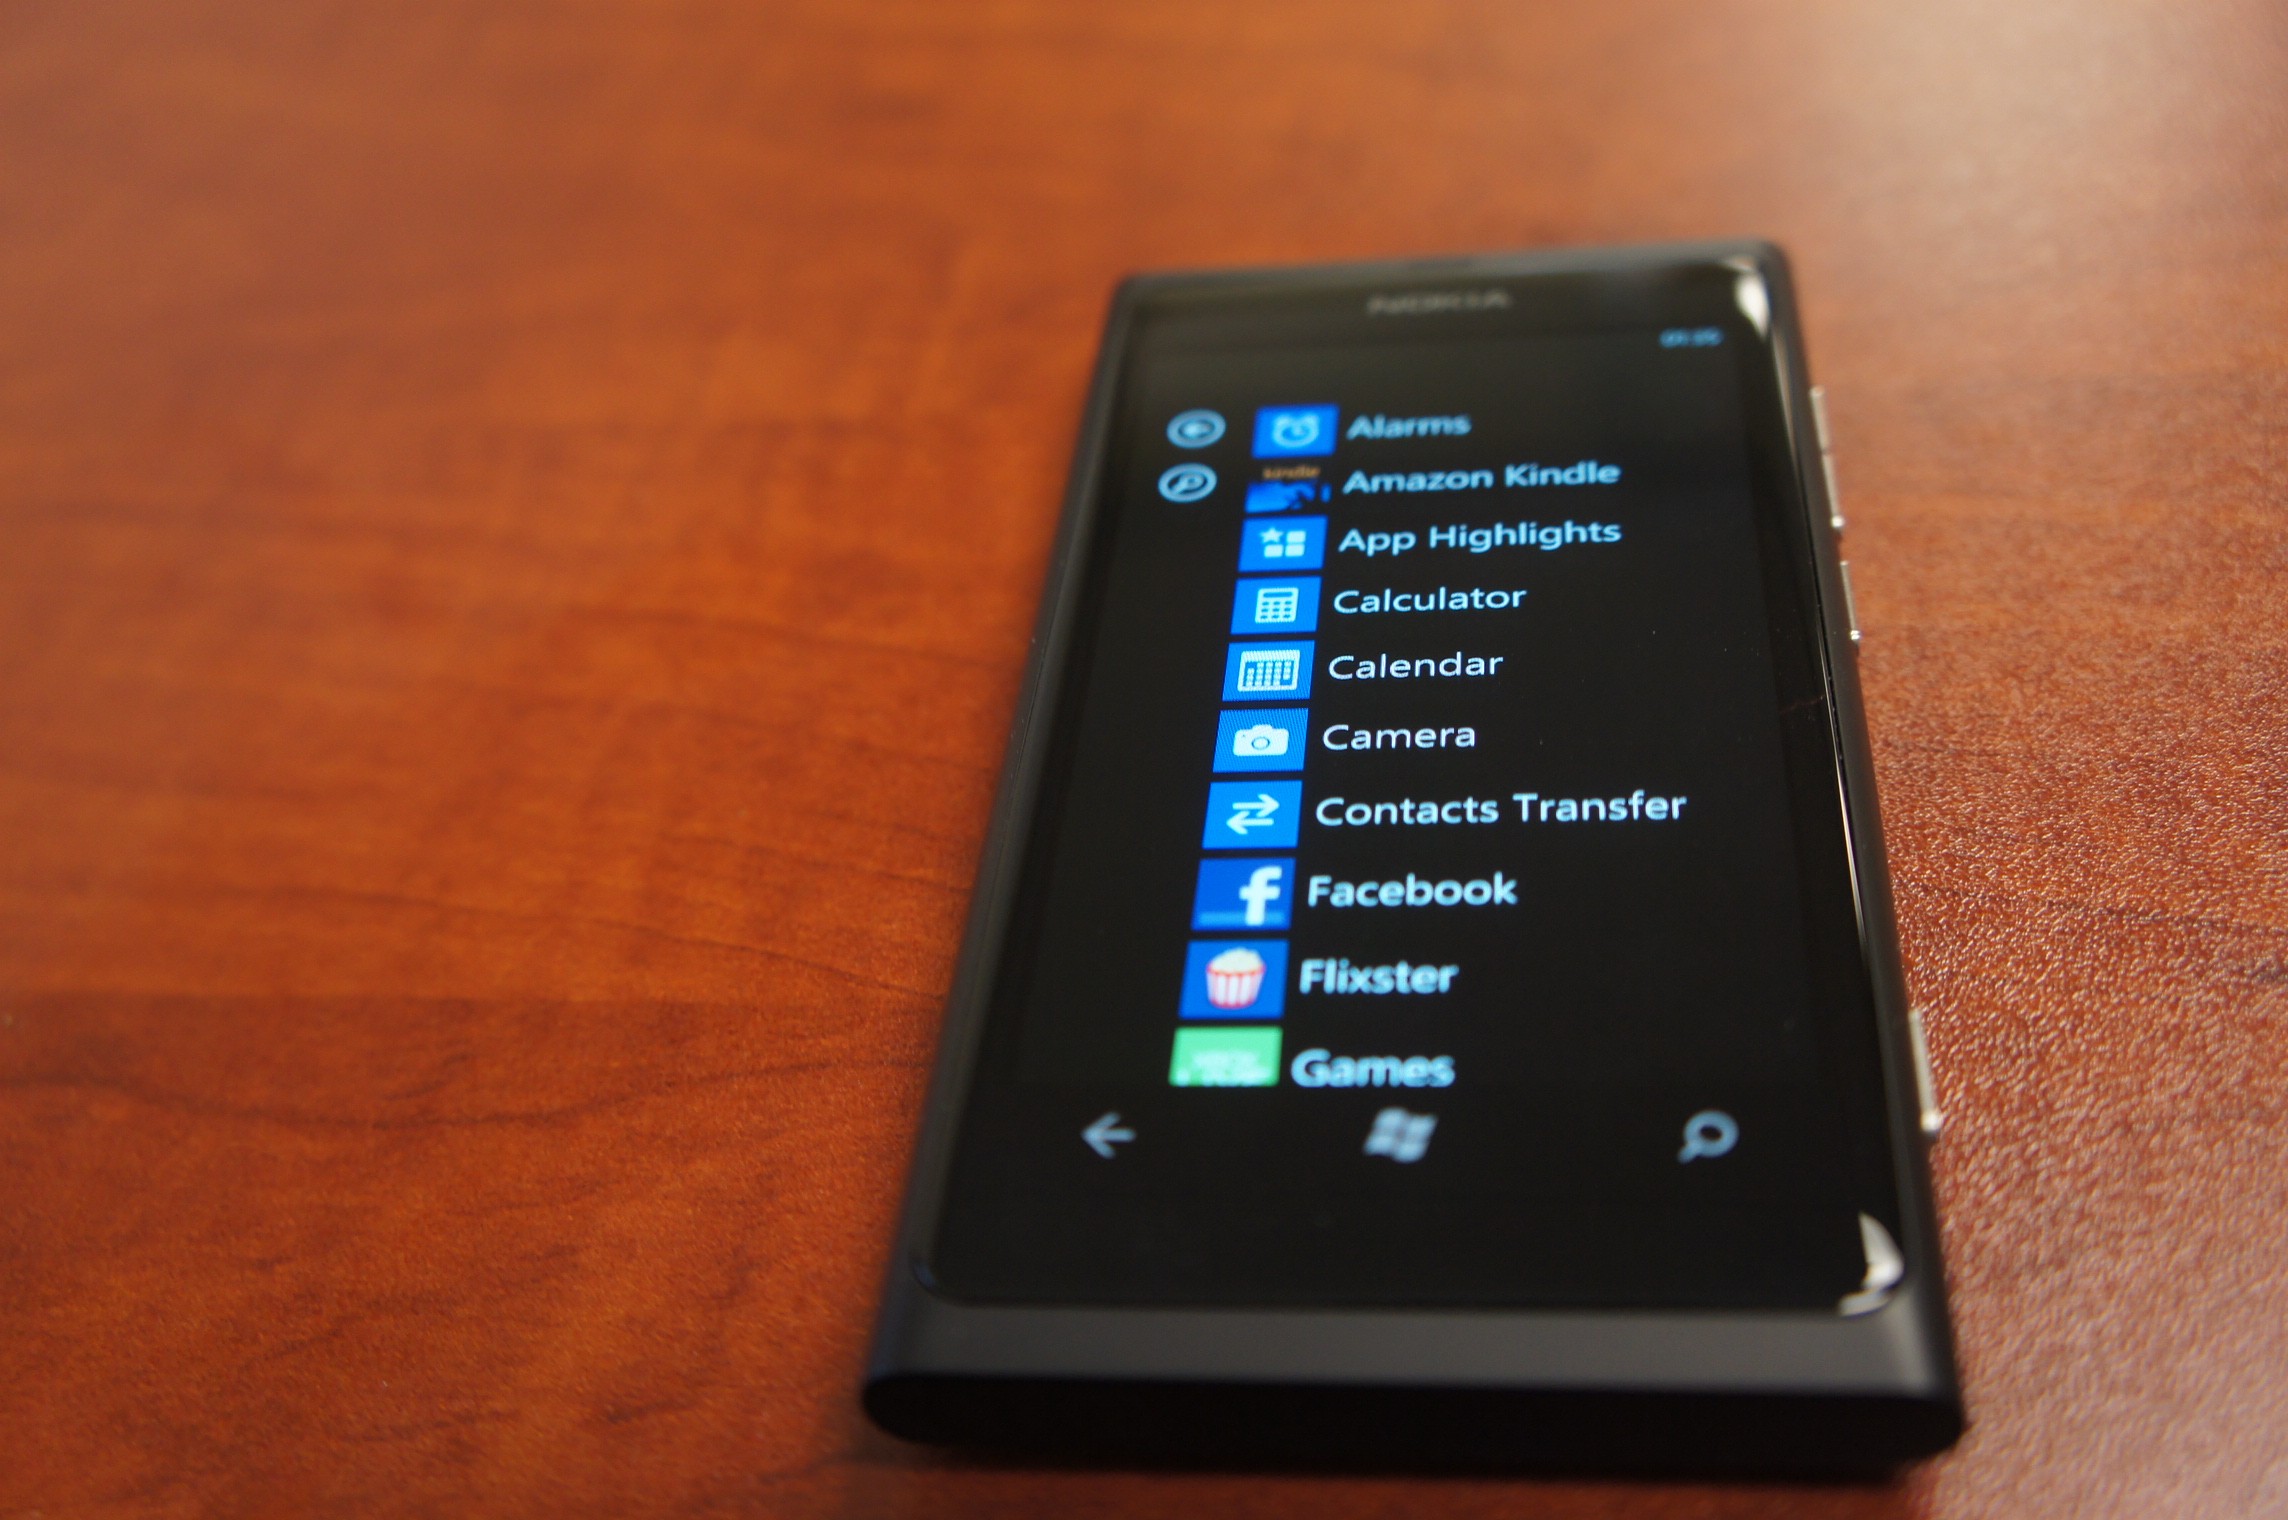 Nokia Lumia 710 620 Power Switch | Apps Directories